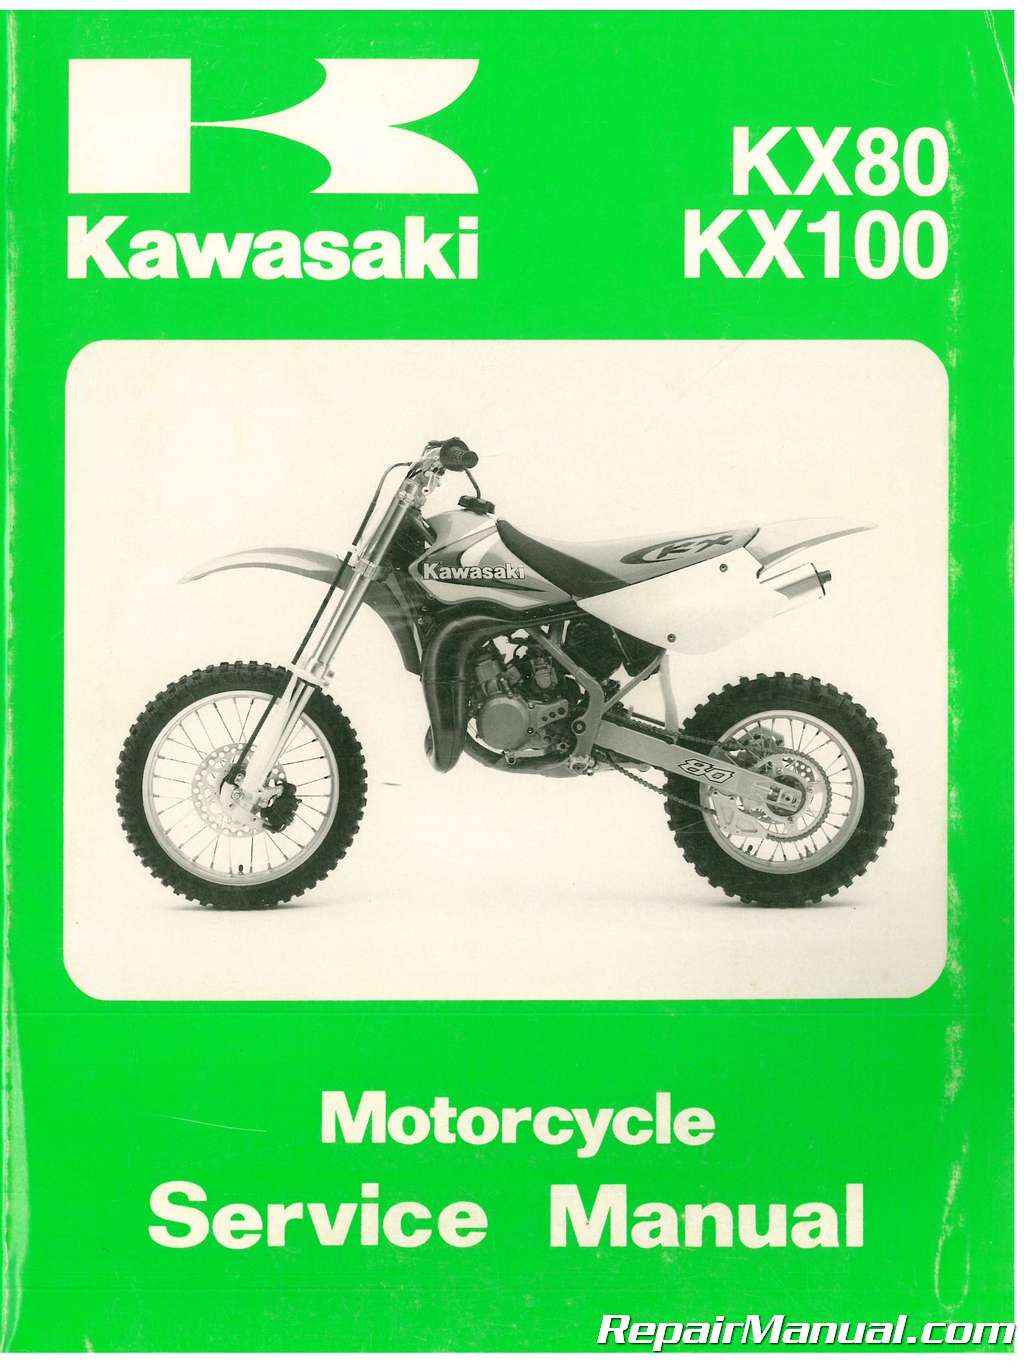 metodologi hagl mosaik Used 1998-1999 Kawasaki KX80 KX100 Service Manual